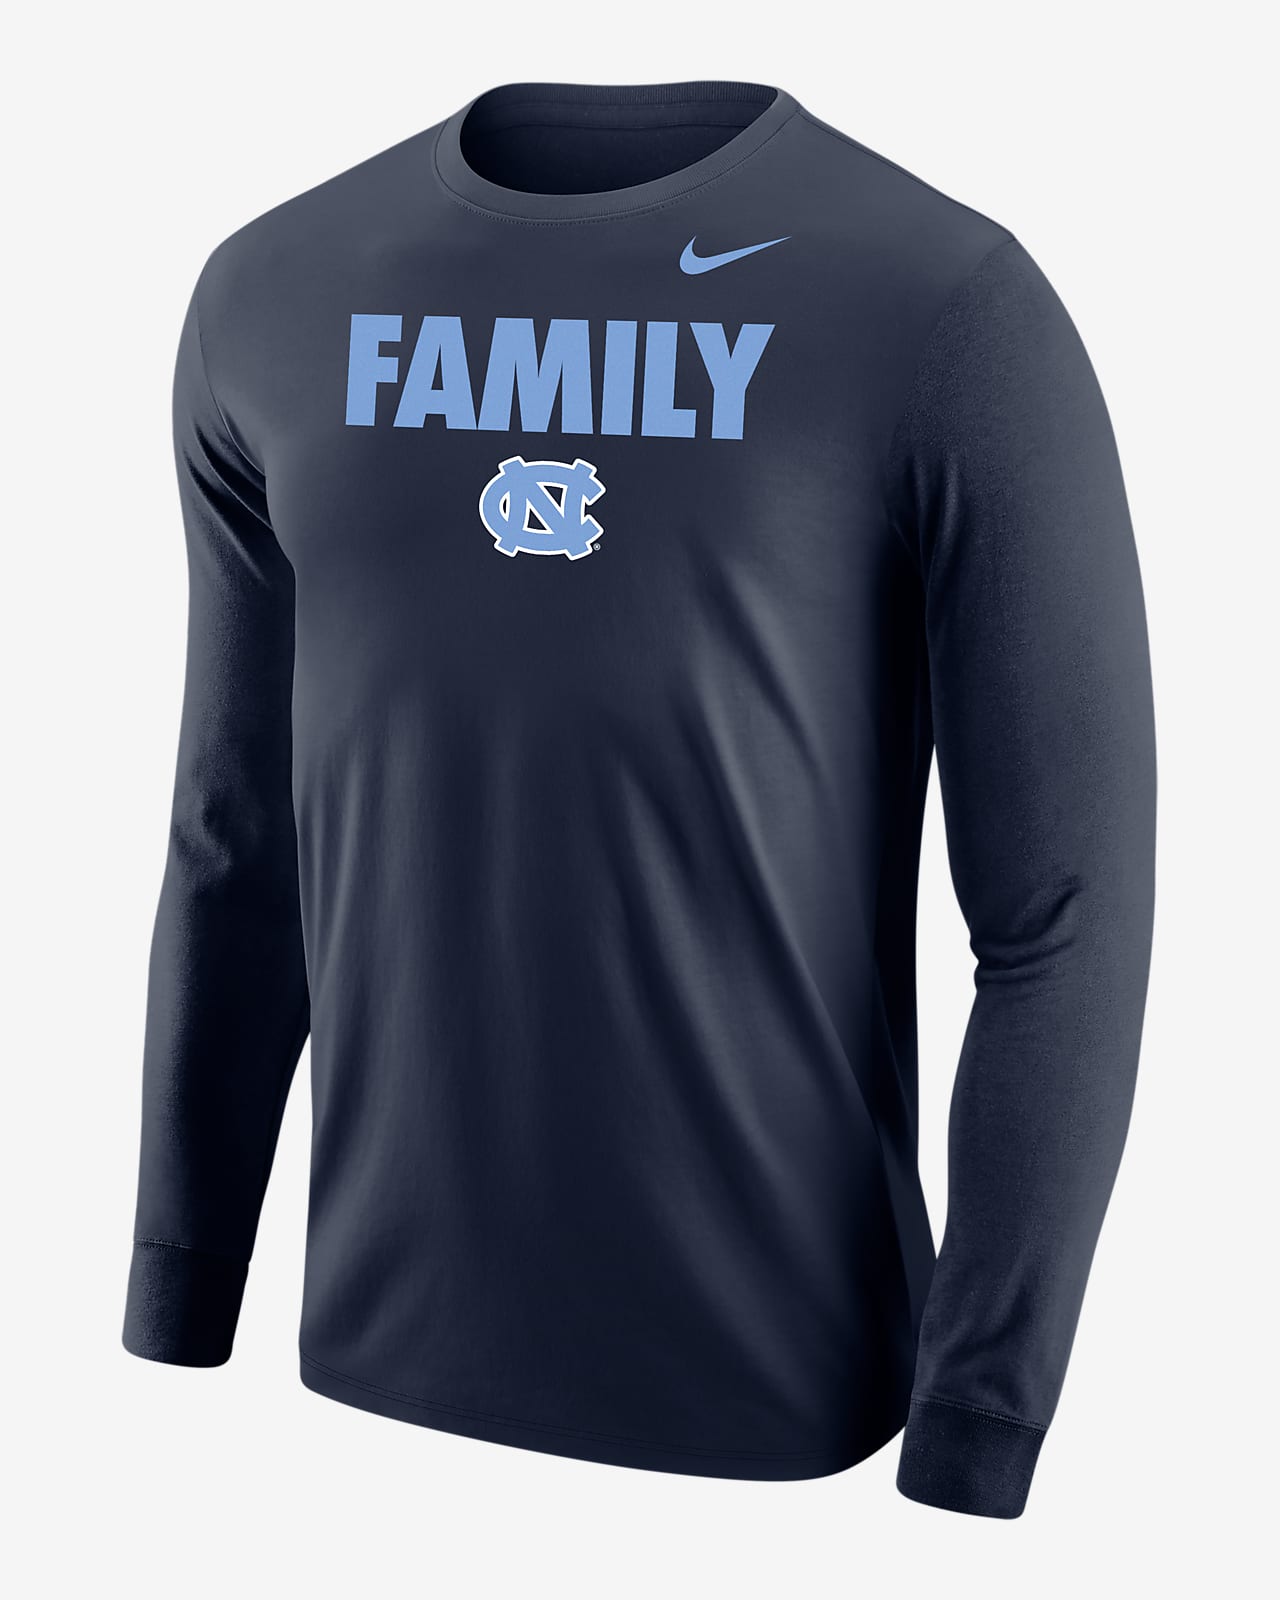 North Carolina Men's Nike College Long-Sleeve T-Shirt